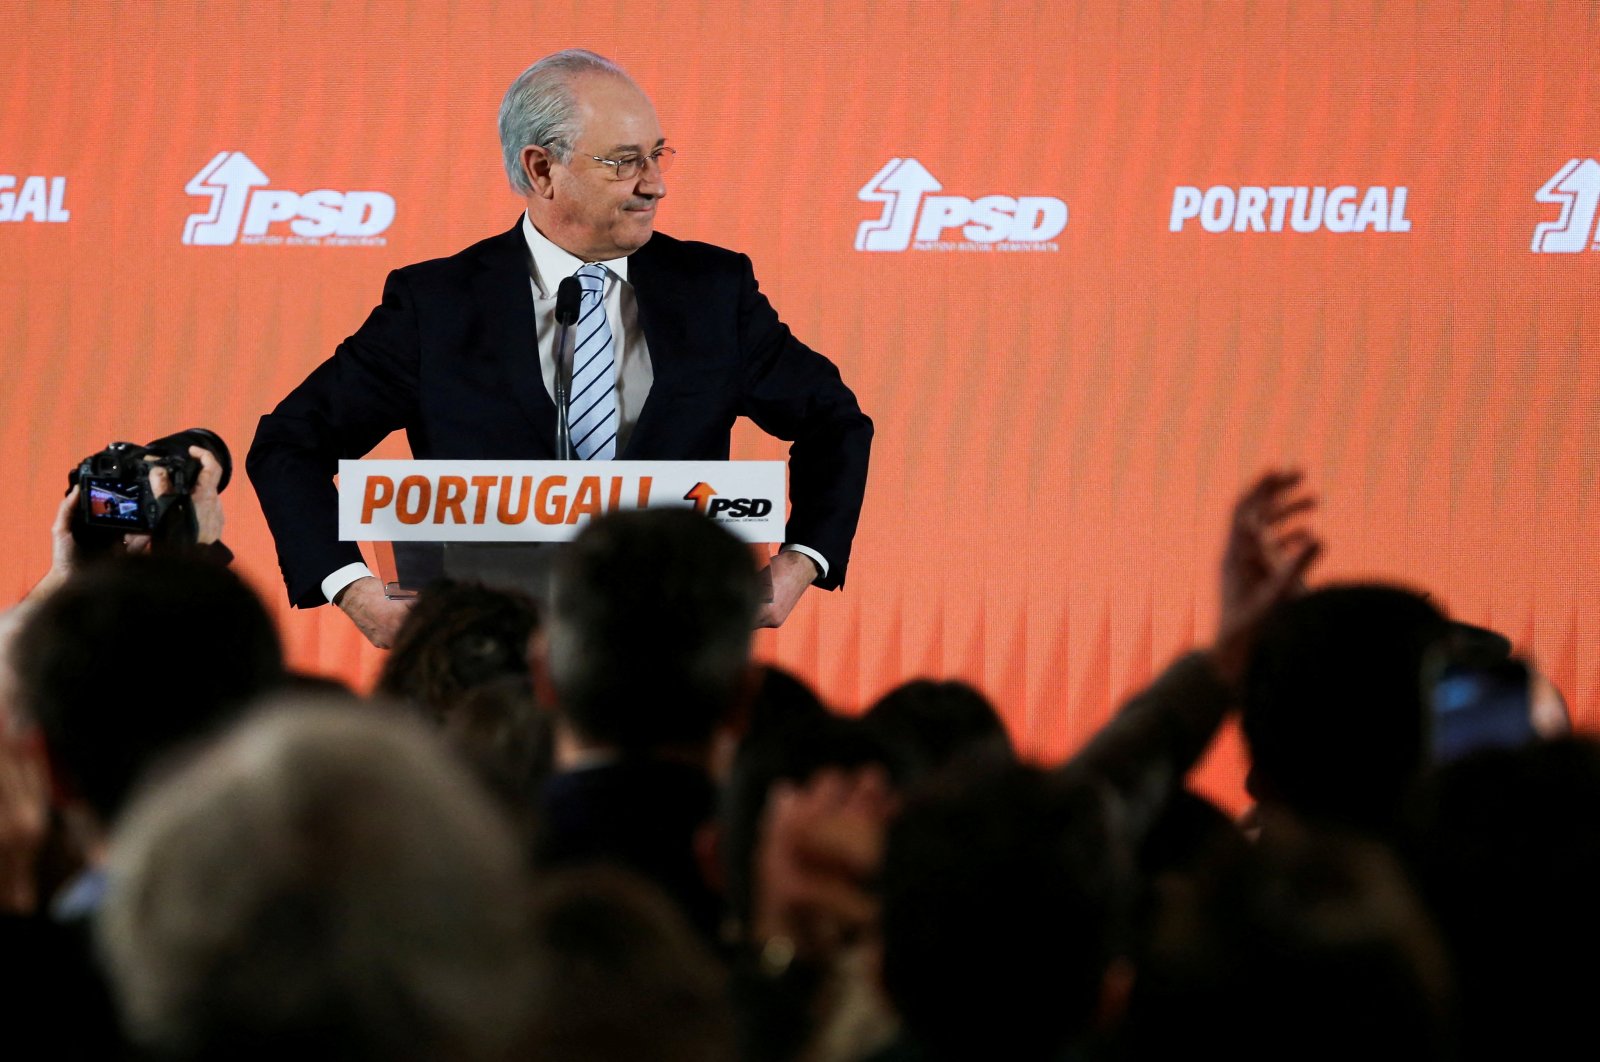 Sosialis yang berkuasa di Portugal memenangkan kemenangan mengejutkan dalam pemilihan cepat